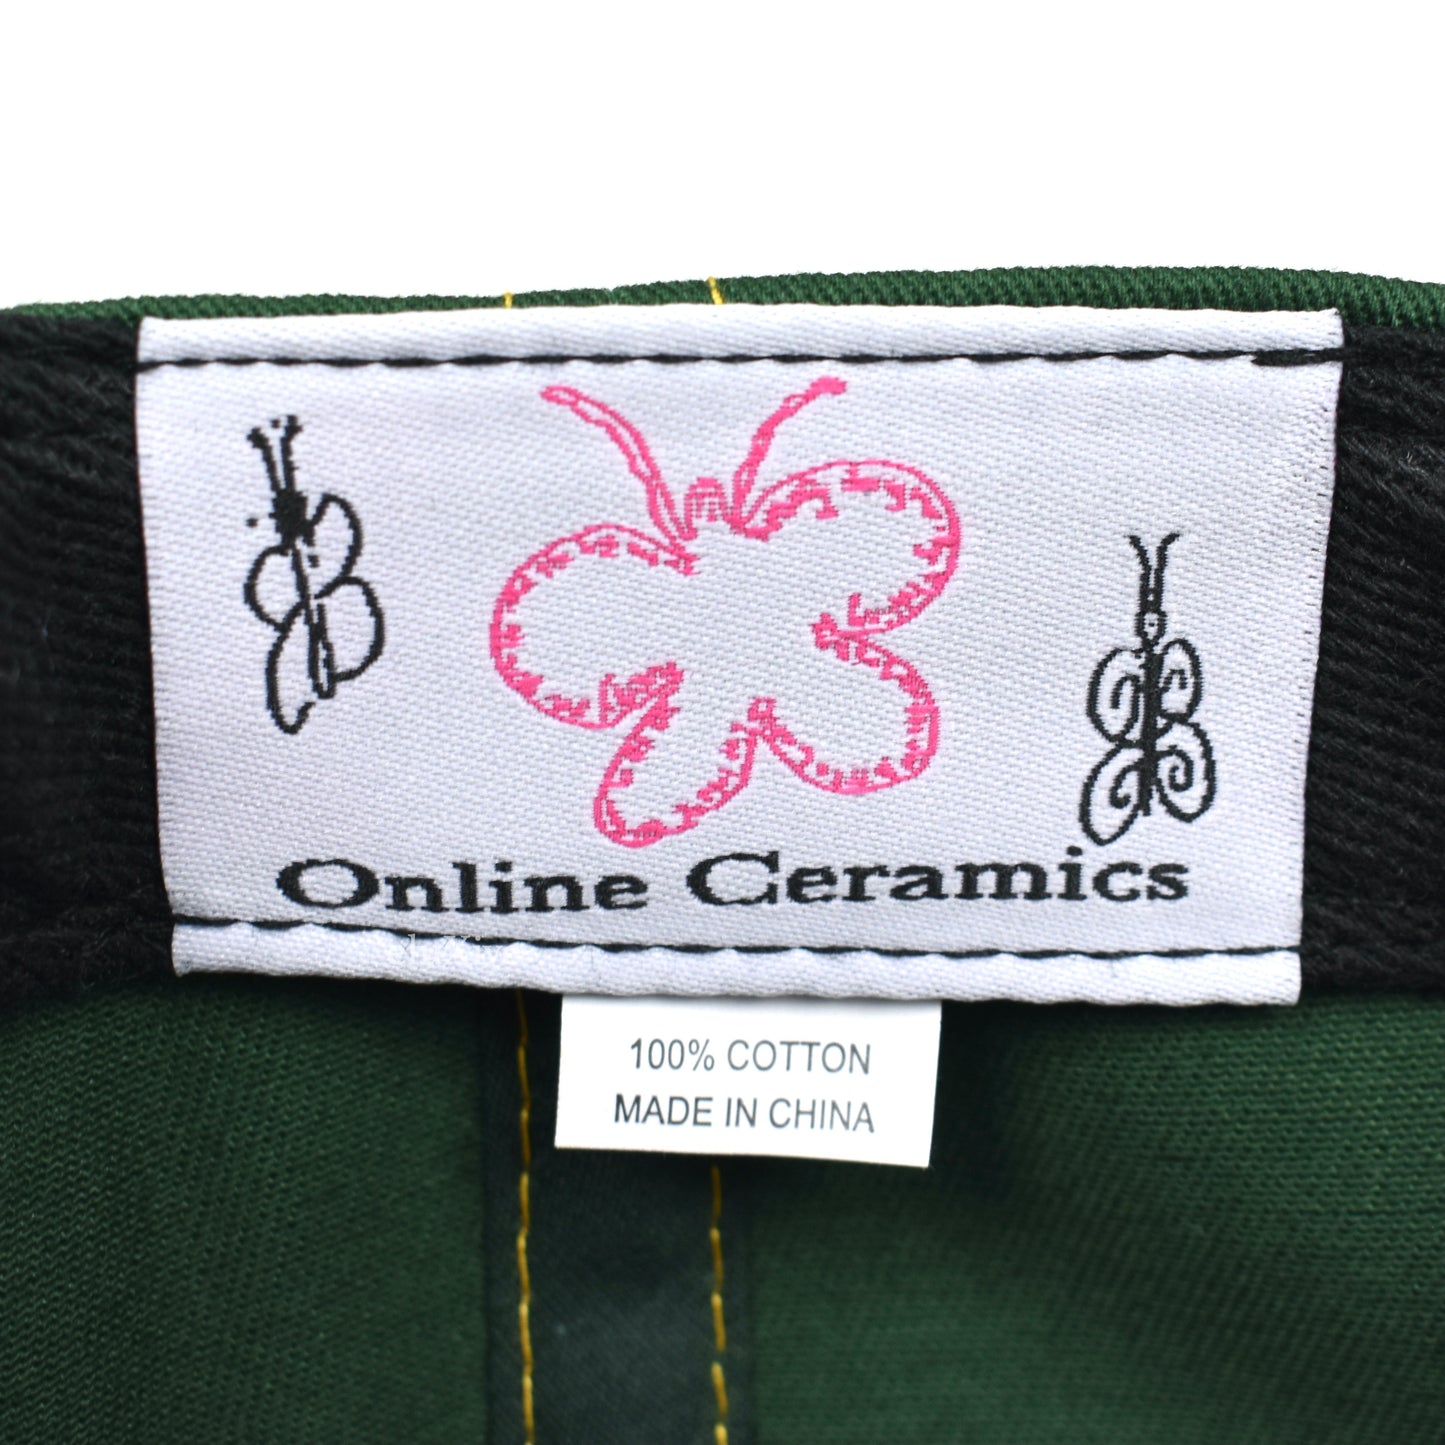 Online Ceramics - Pleased To Meet You 'Love' Hat (Dark Green)